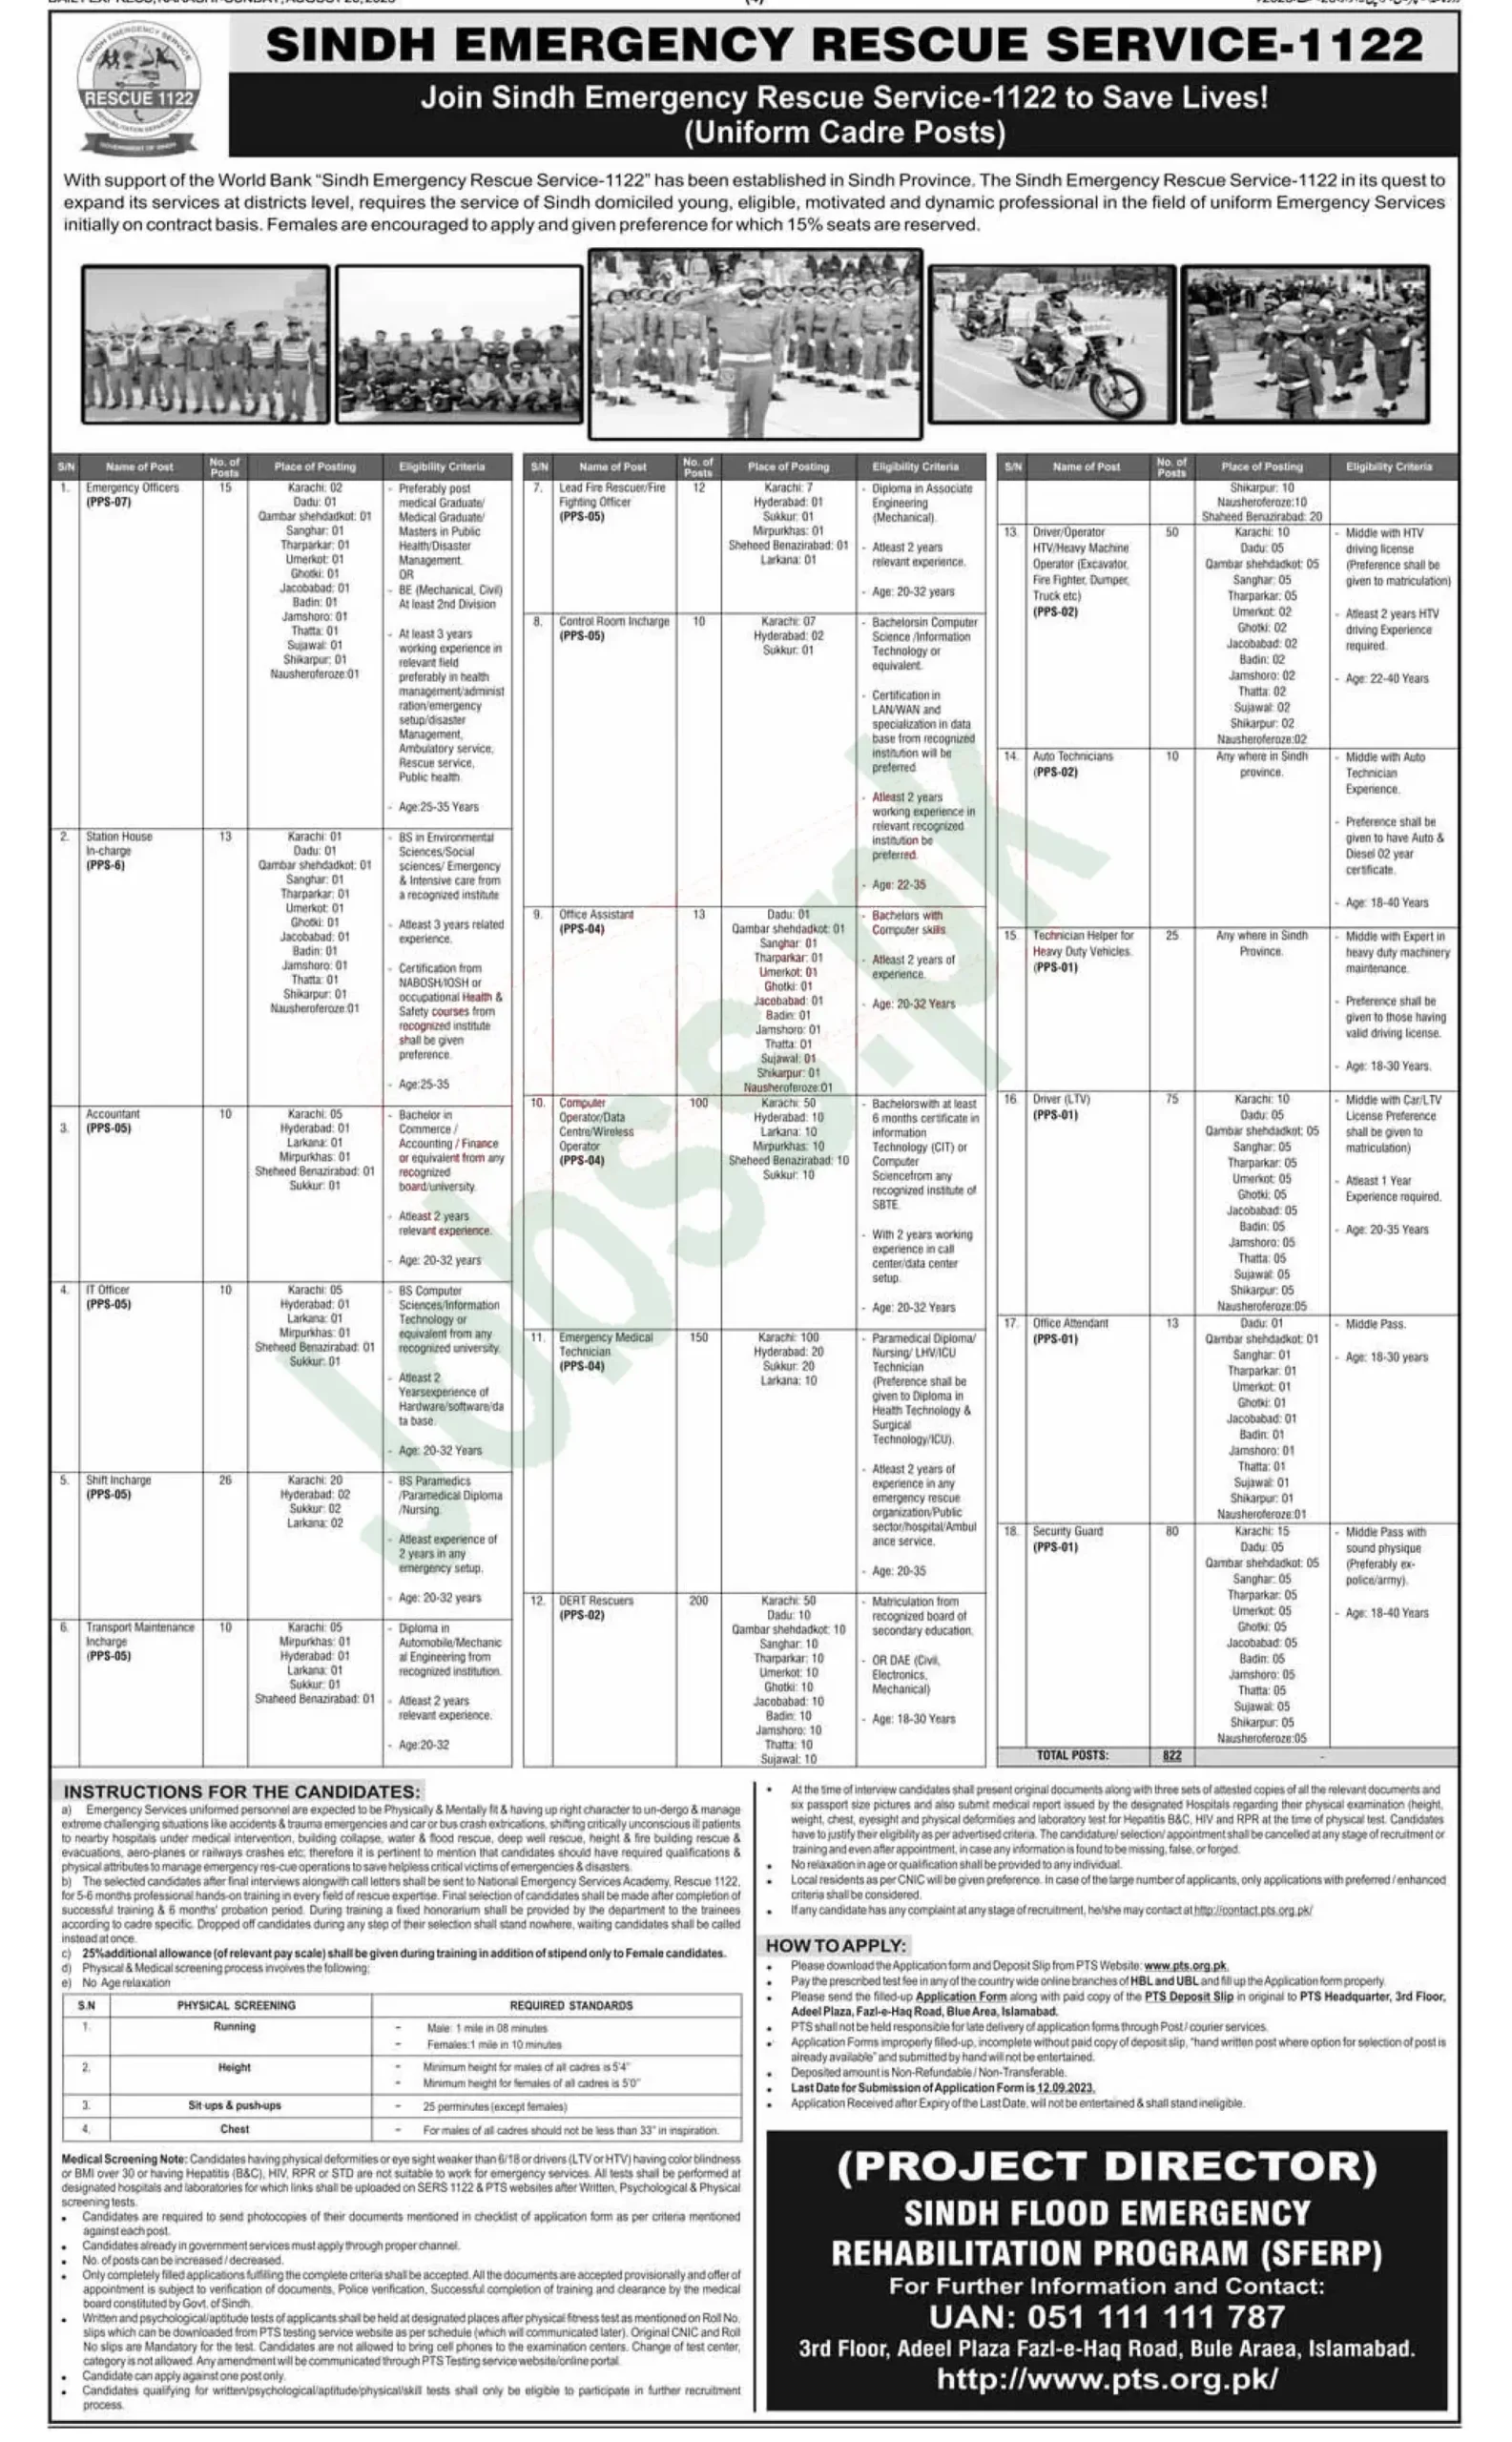 Rescue 1122 Jobs 2023 Application Form at www.rescue.gov.pk